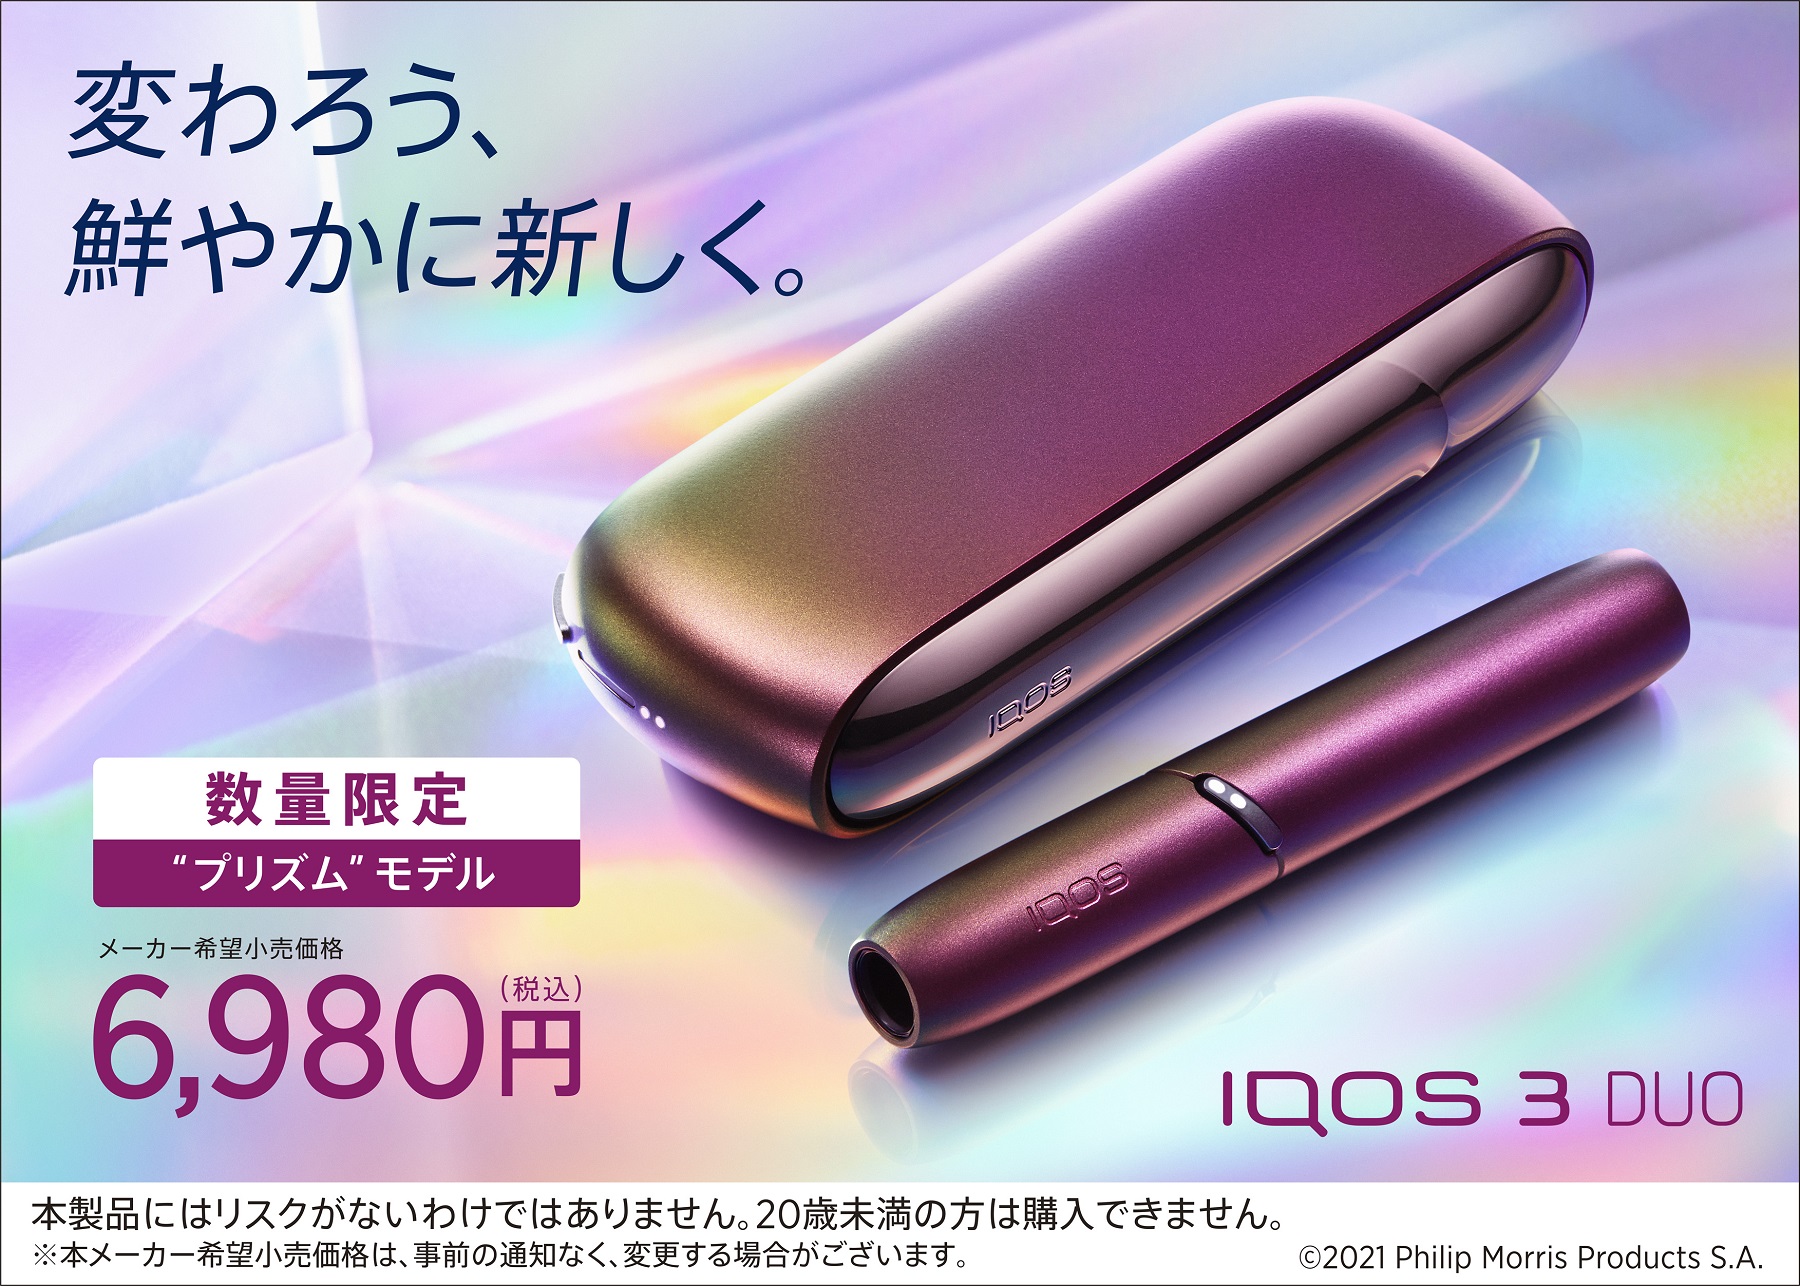 IQOS 3 DUO」春の数量限定カラー、“プリズム”モデルが登場！ 豪華景品 